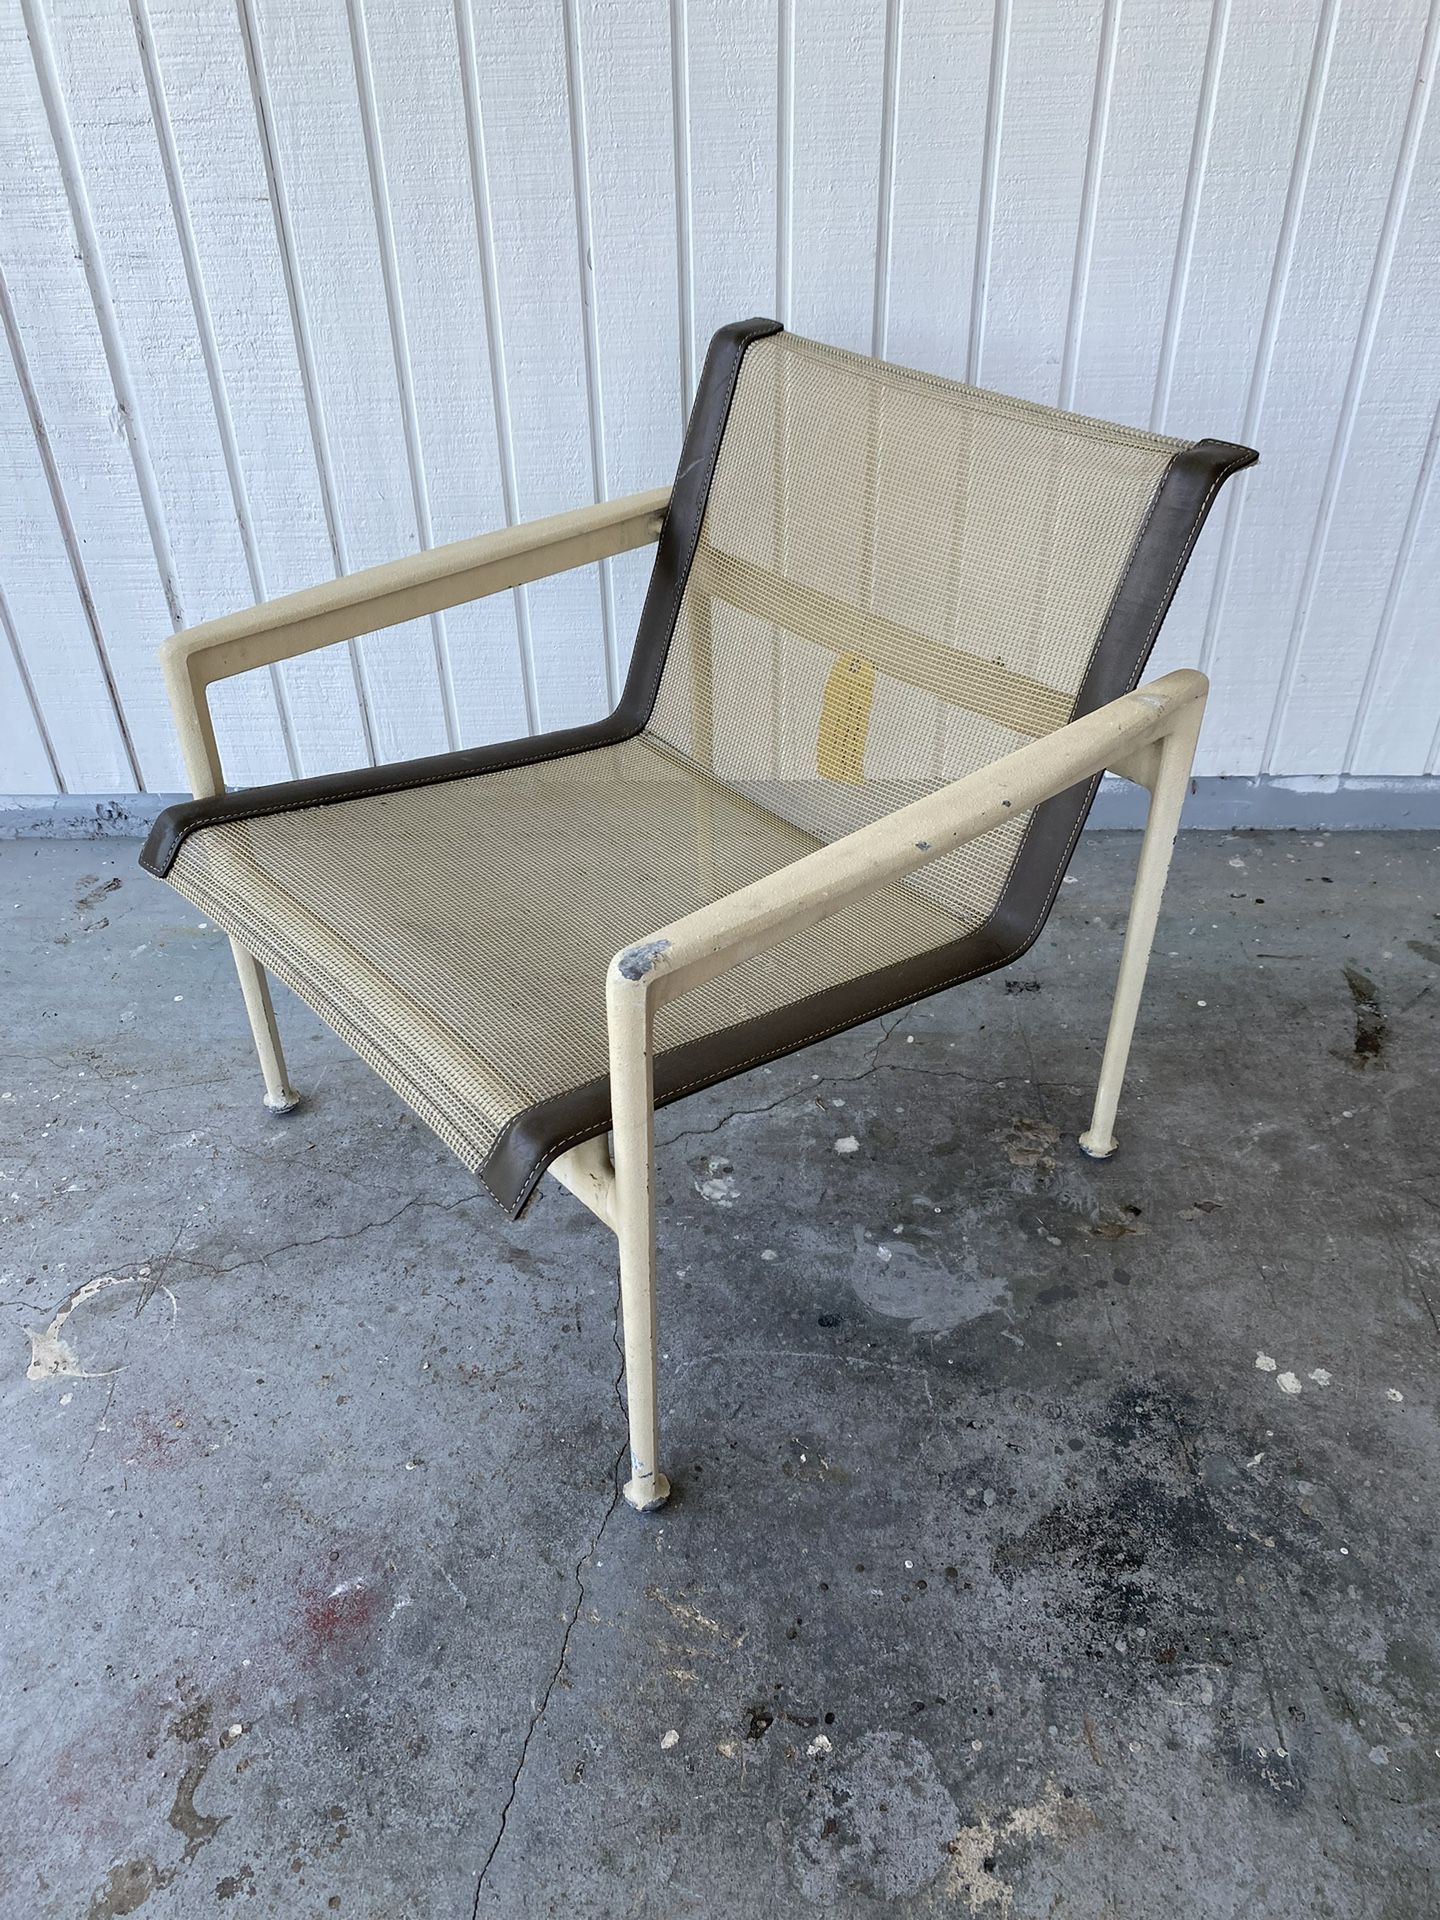 Vintage Modern Richard Schults Mid Century Arm Chair $250